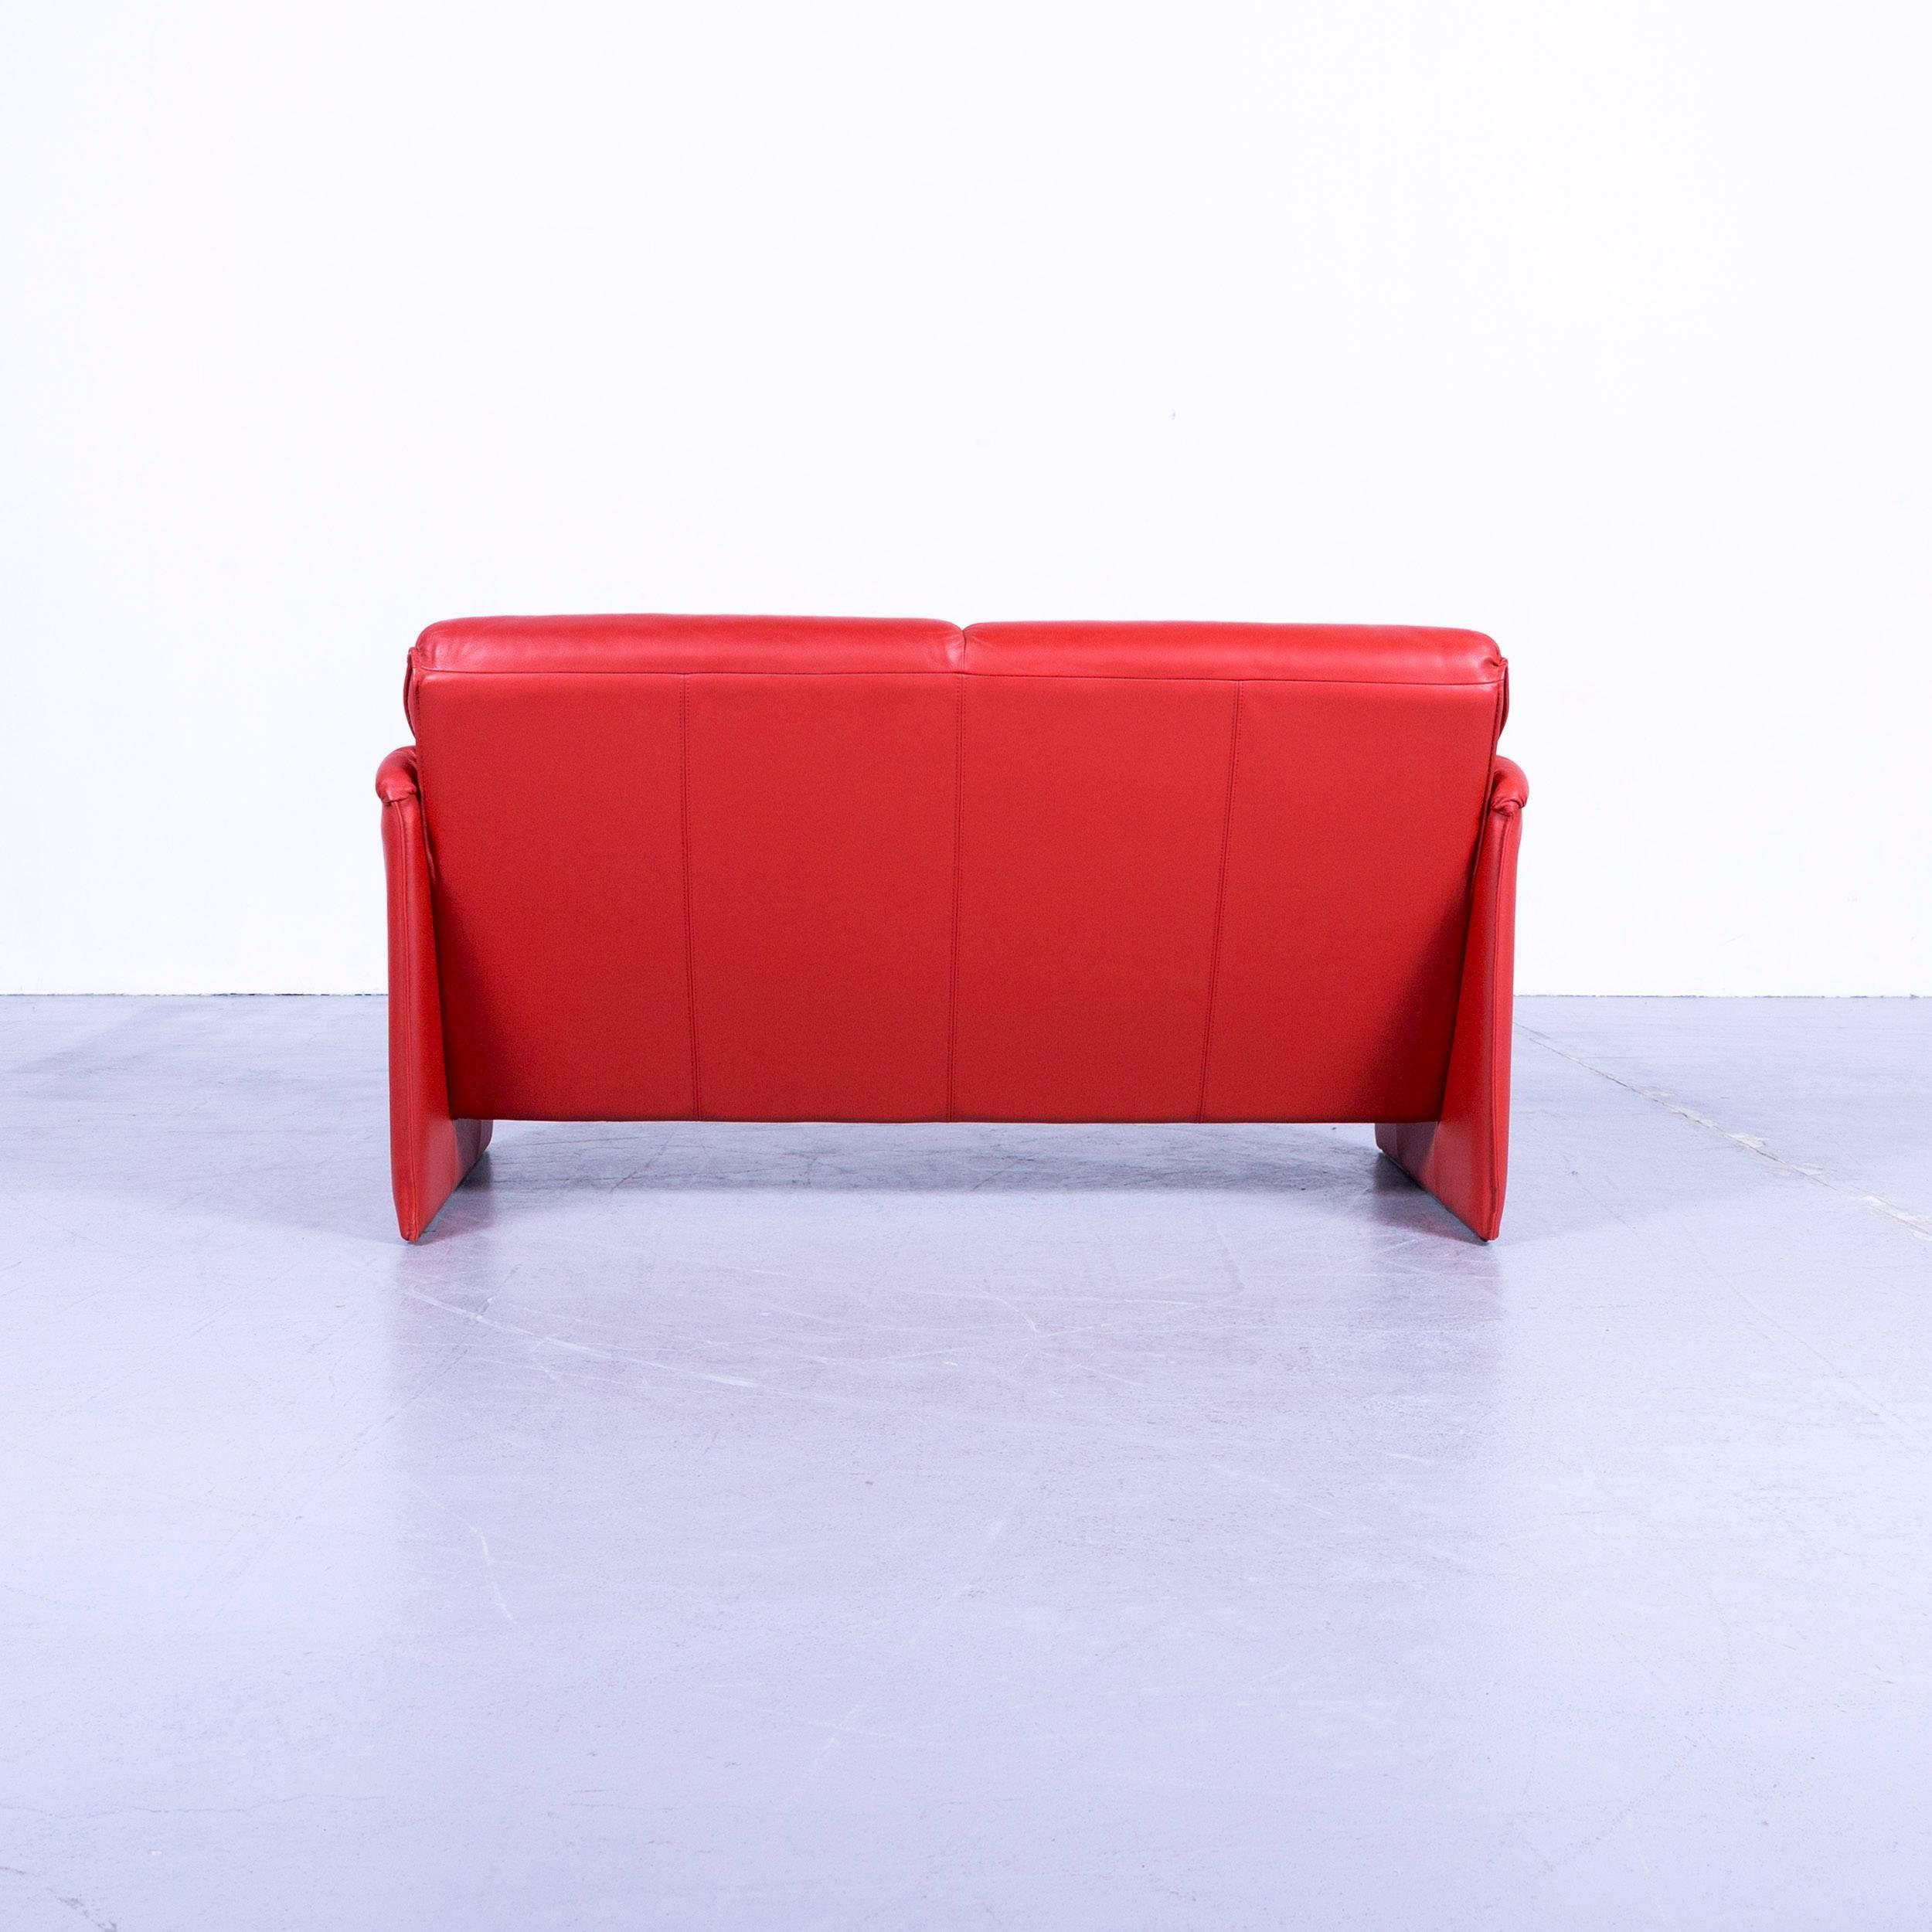 Leolux Bora Designer Sofa Leather Orange Red Two-Seat Couch Modern For Sale 3